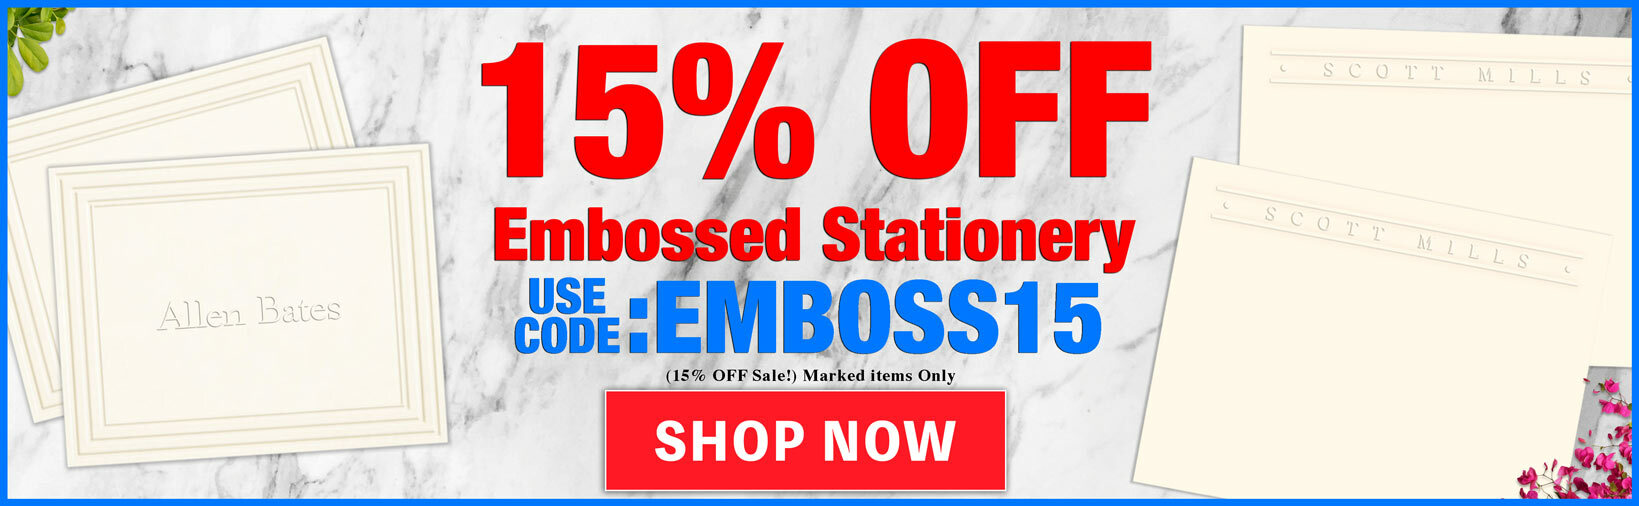 15% OFF Embossed Stationery Sale at StationeryXpress.com